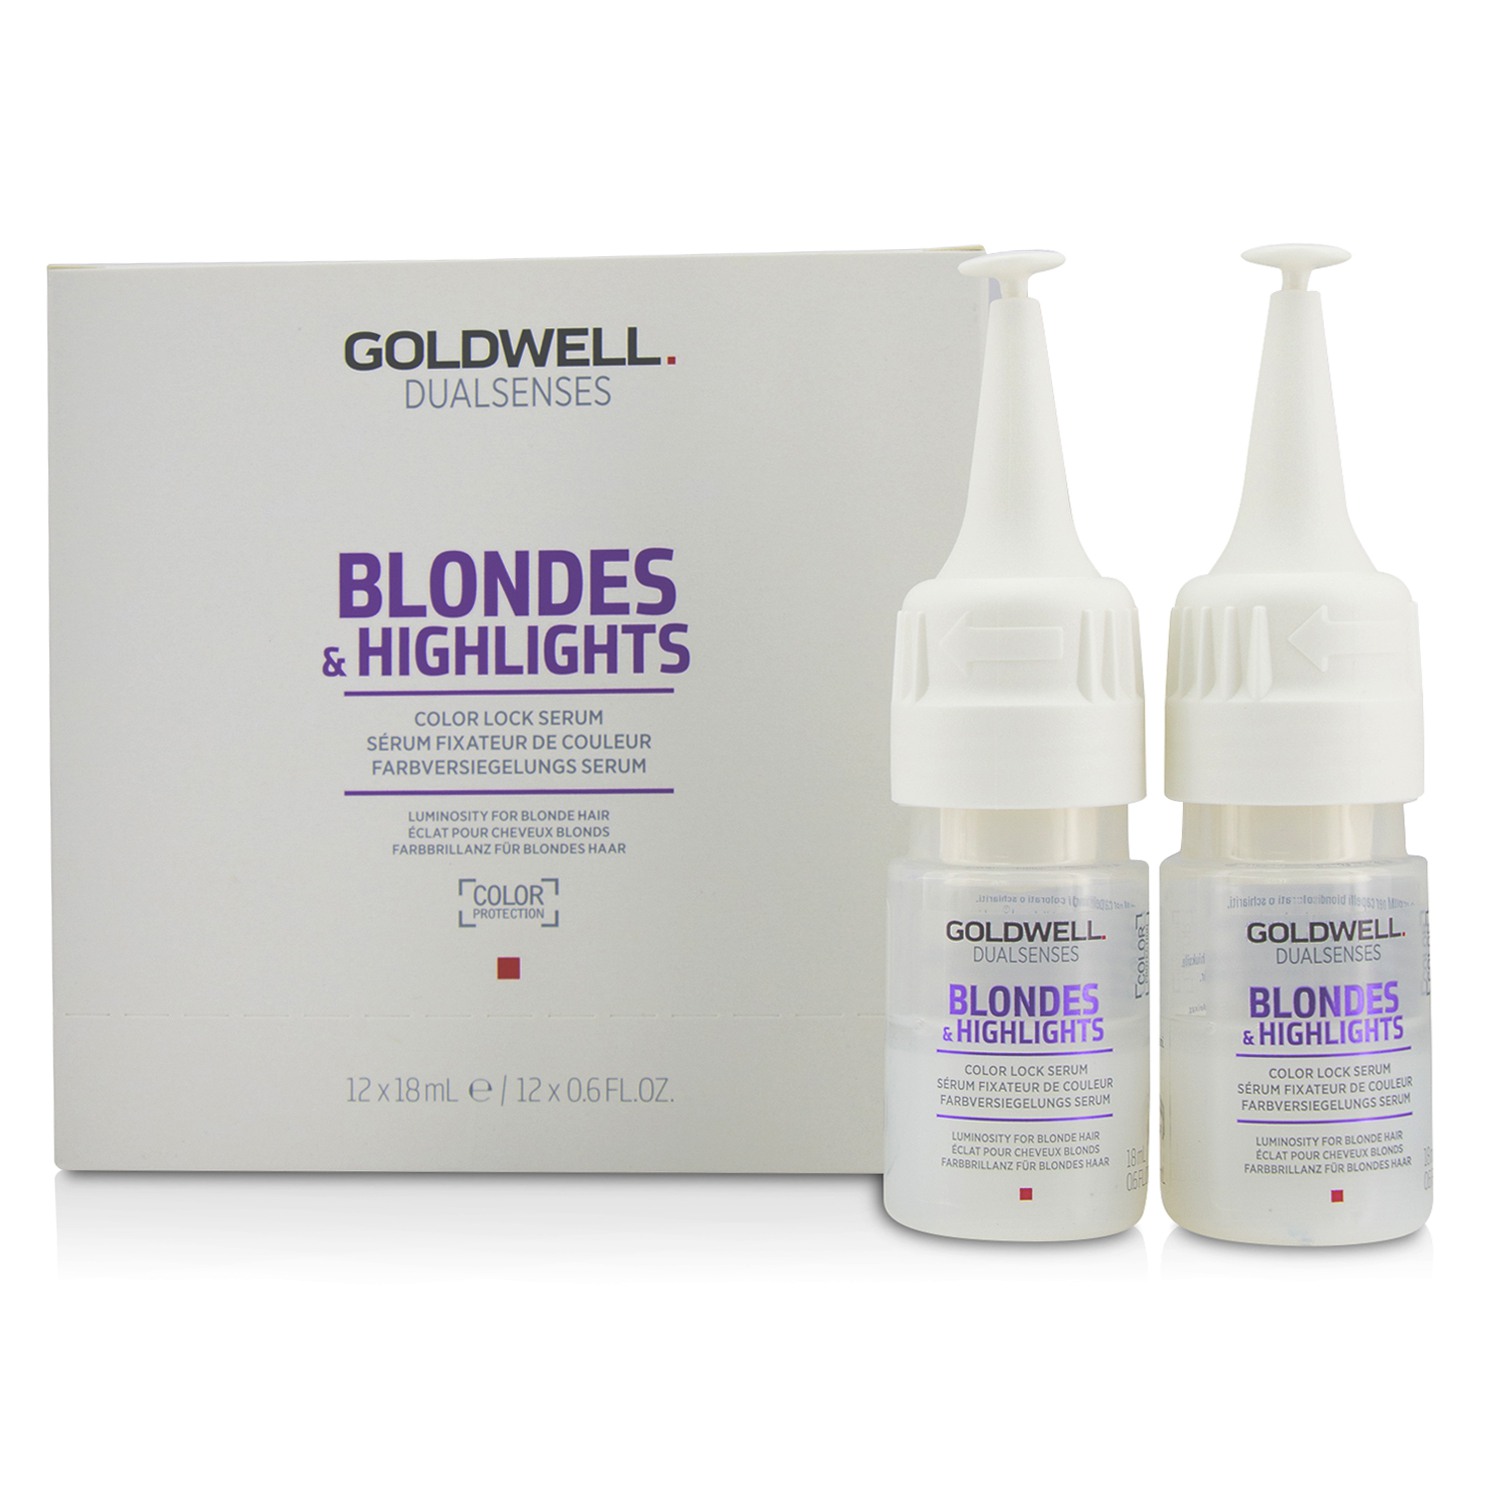 Dual Senses Blondes & Highlights Color Lock Serum (Luminosity For Blonde Hair) Goldwell Image